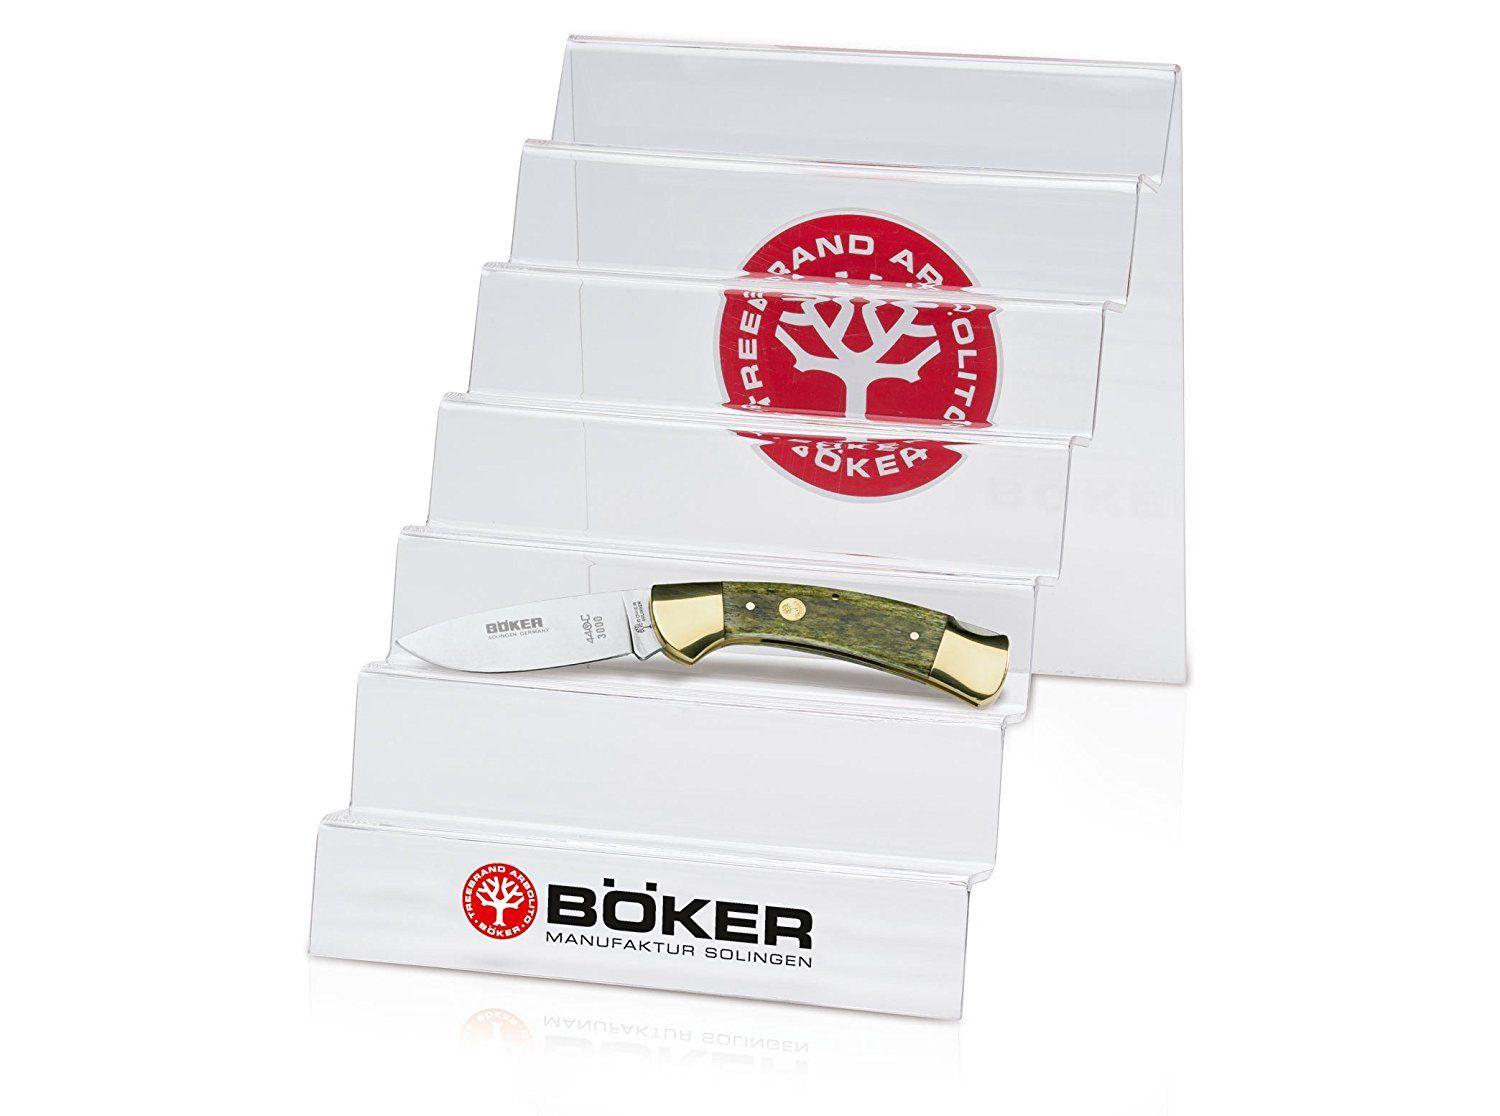 Boker Logo - Cheap Boker Knives Tree Brand, find Boker Knives Tree Brand deals on ...